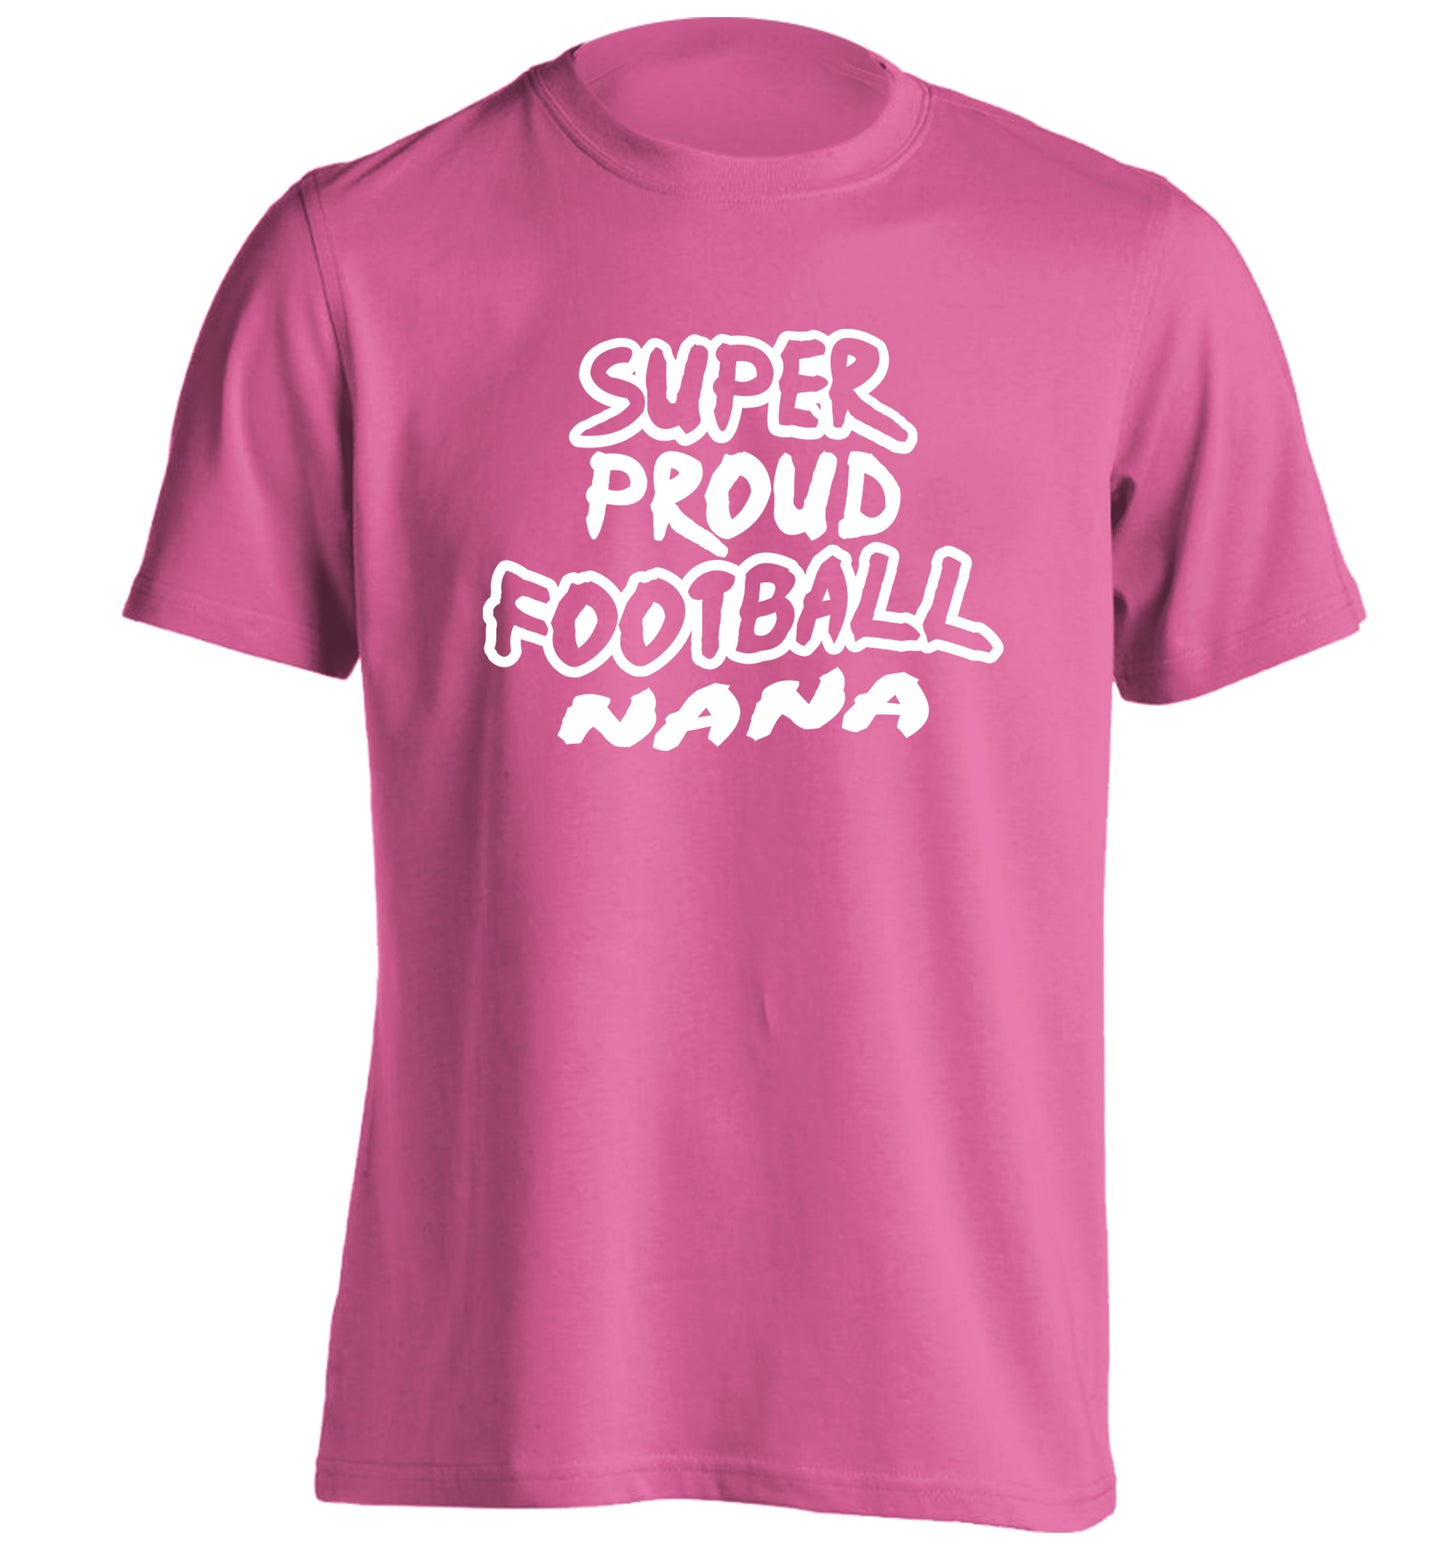 Super proud football nana adults unisexpink Tshirt 2XL